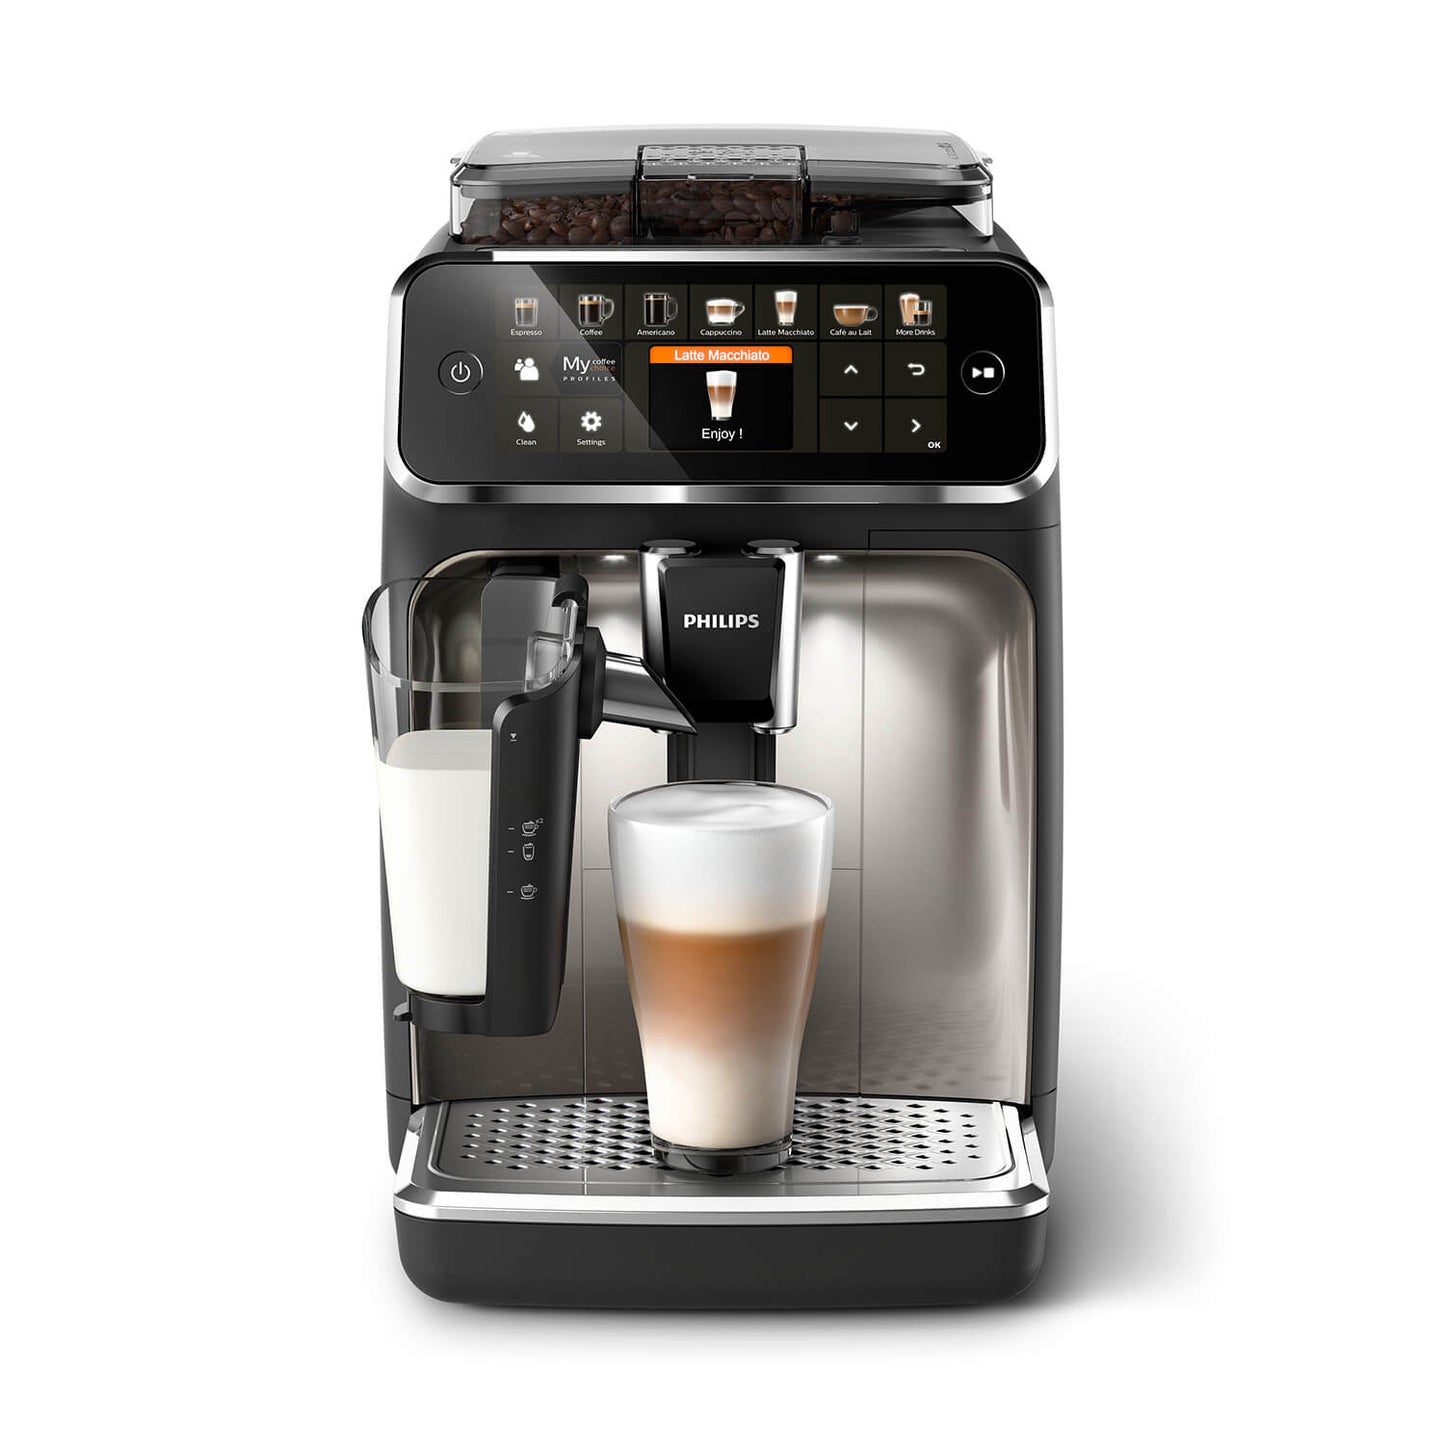 Philips 5400 LatteGo Superautomatic Espresso Machine, Black